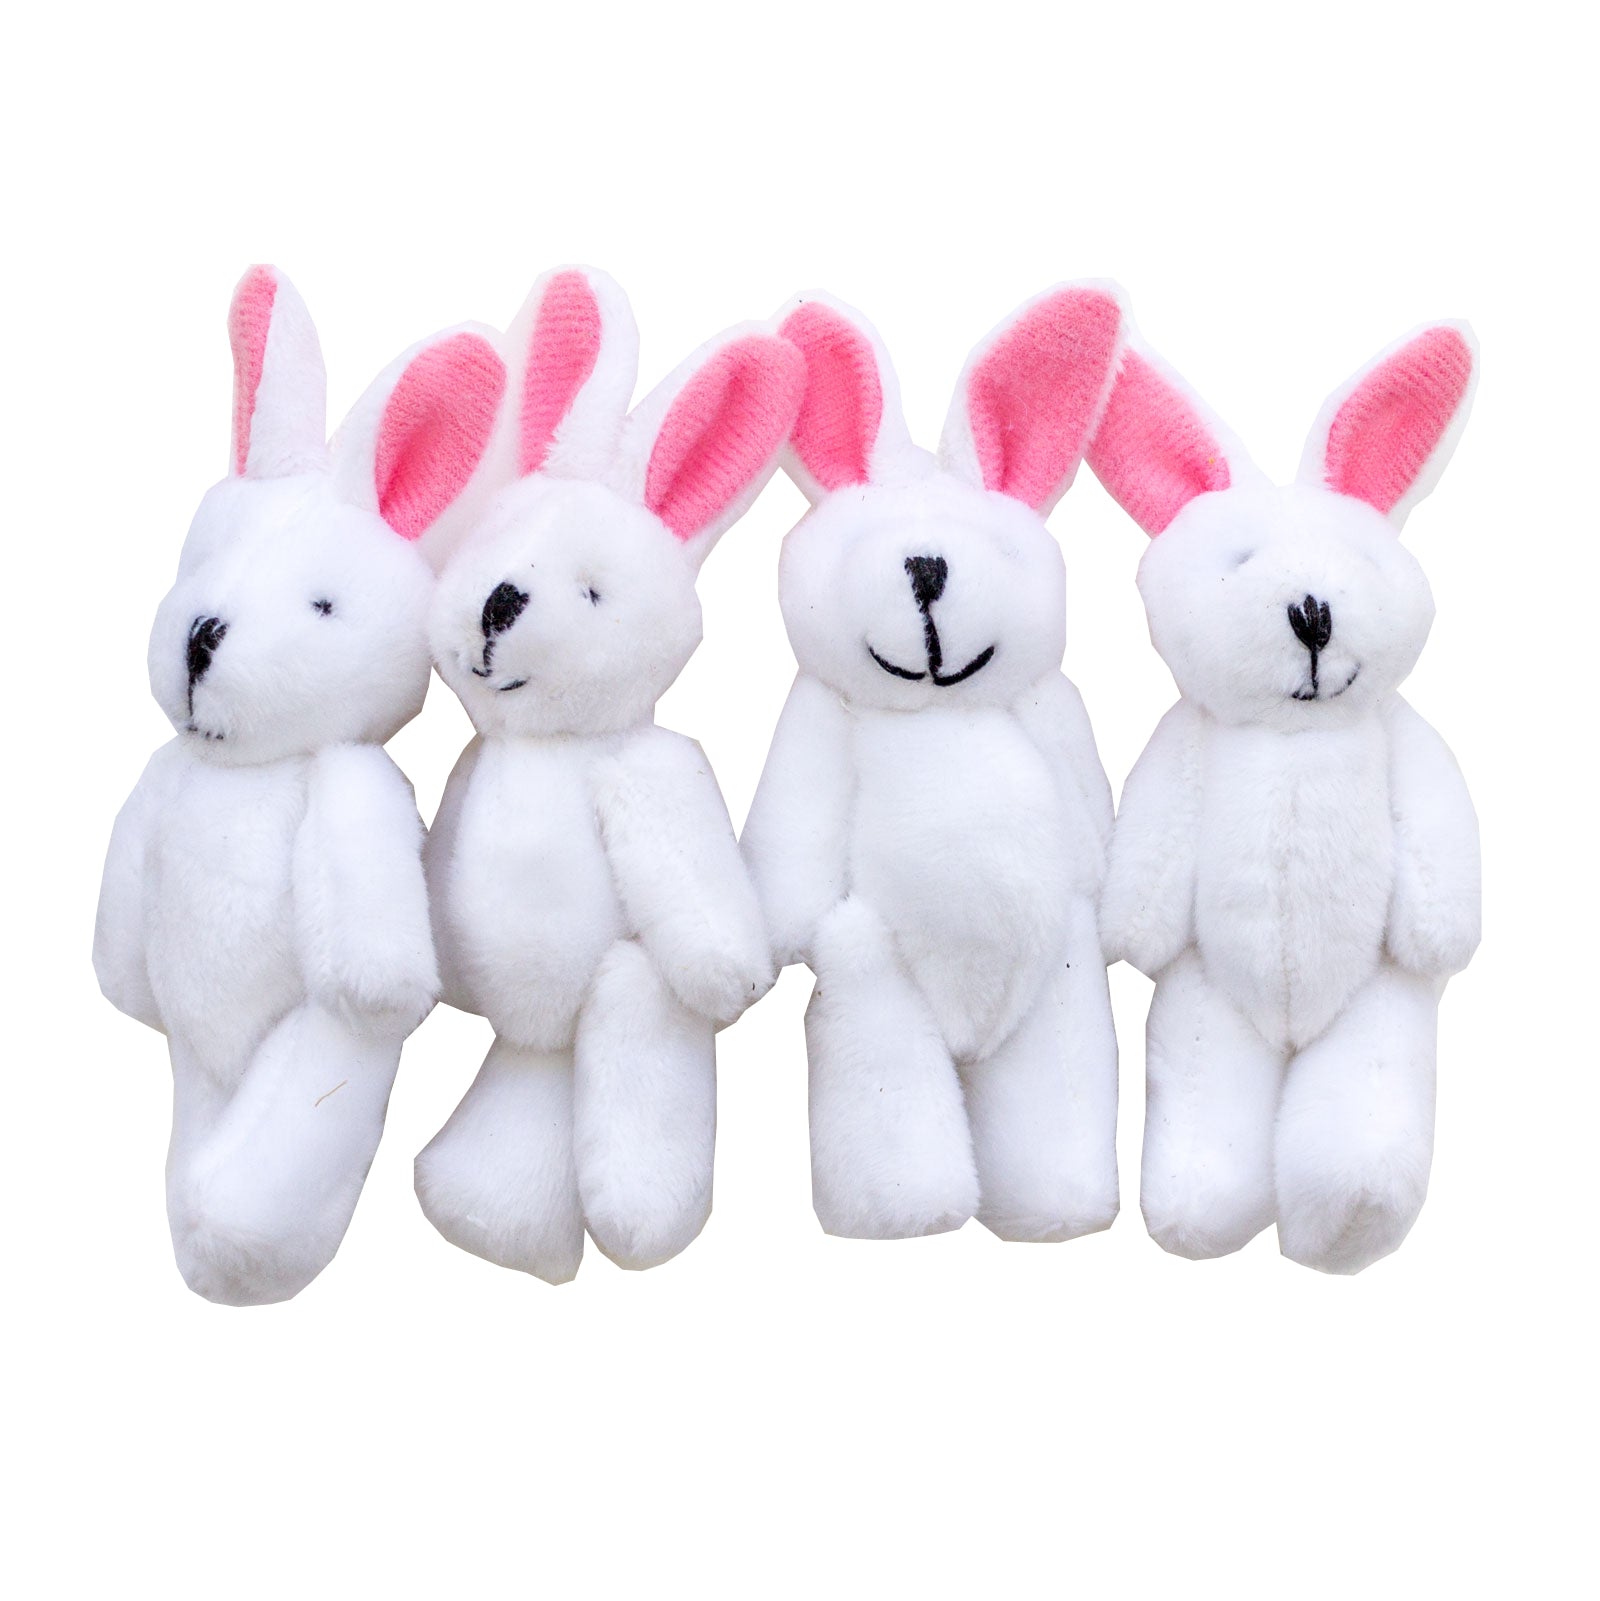 Small Rabbits X 75 - Cute Soft Adorable